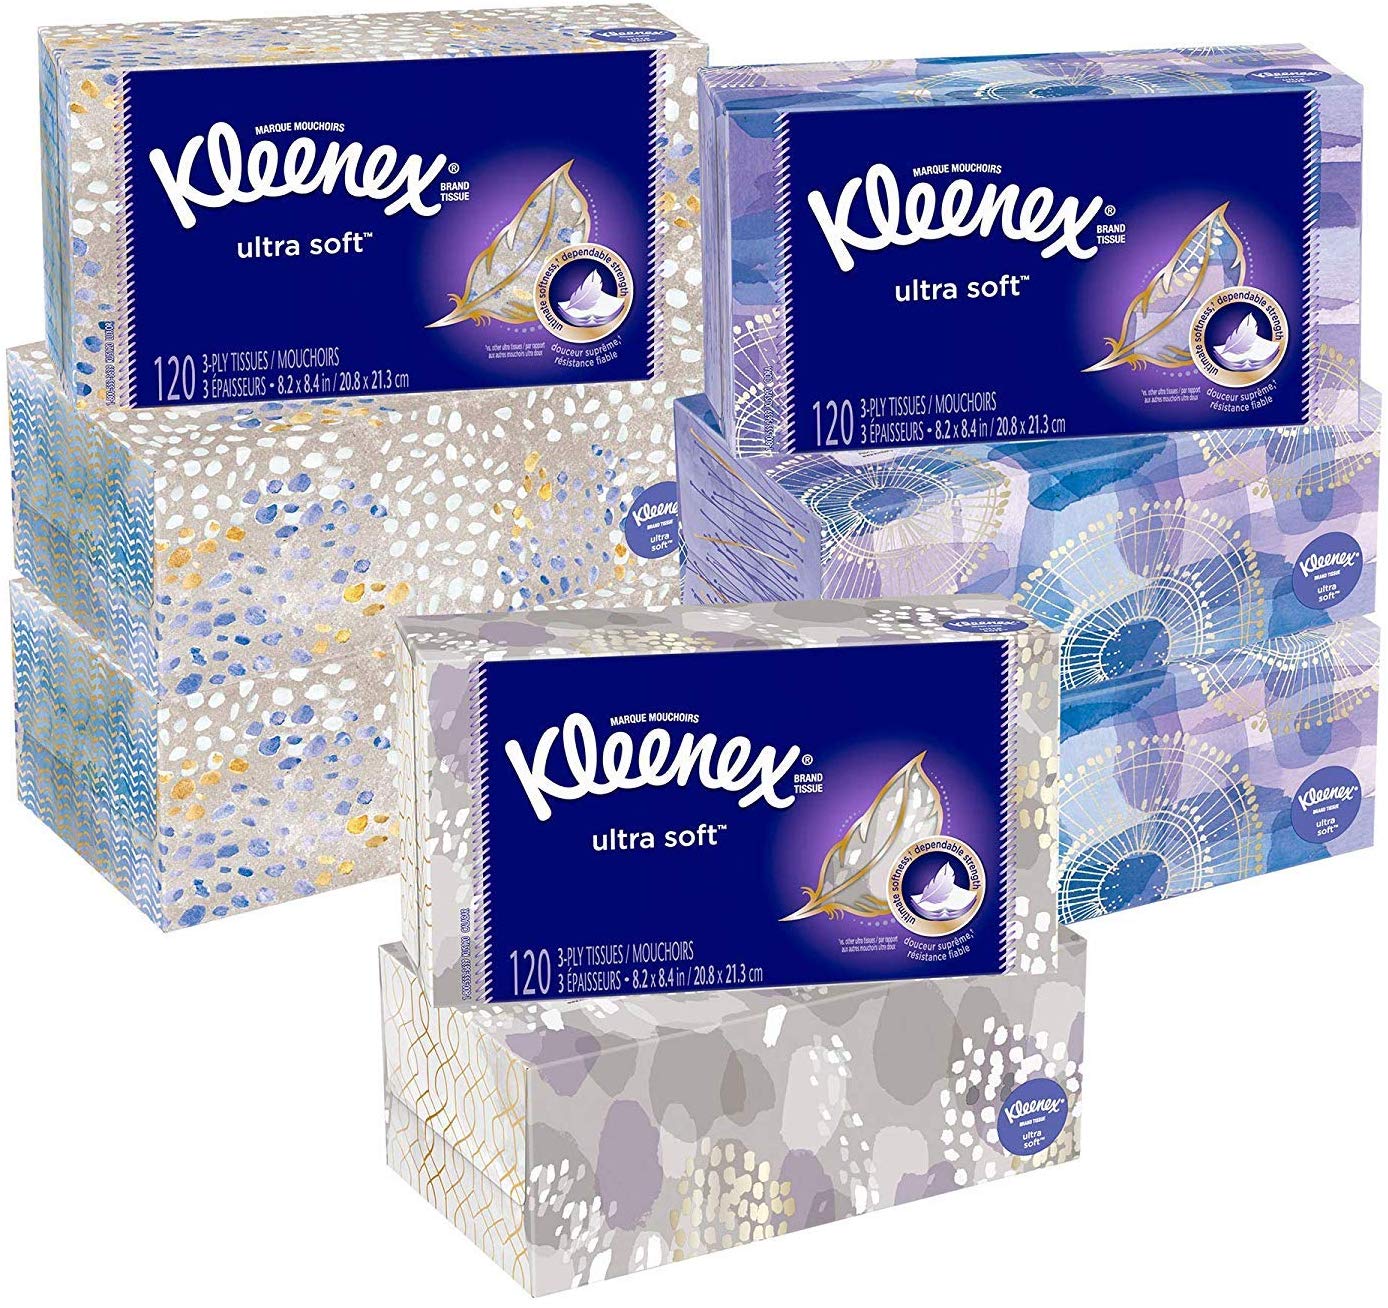 Kleenex Ultra Soft Facial Tissues, 8 Flat Boxes, 120 Tissues per Box (960 Tissues Total)